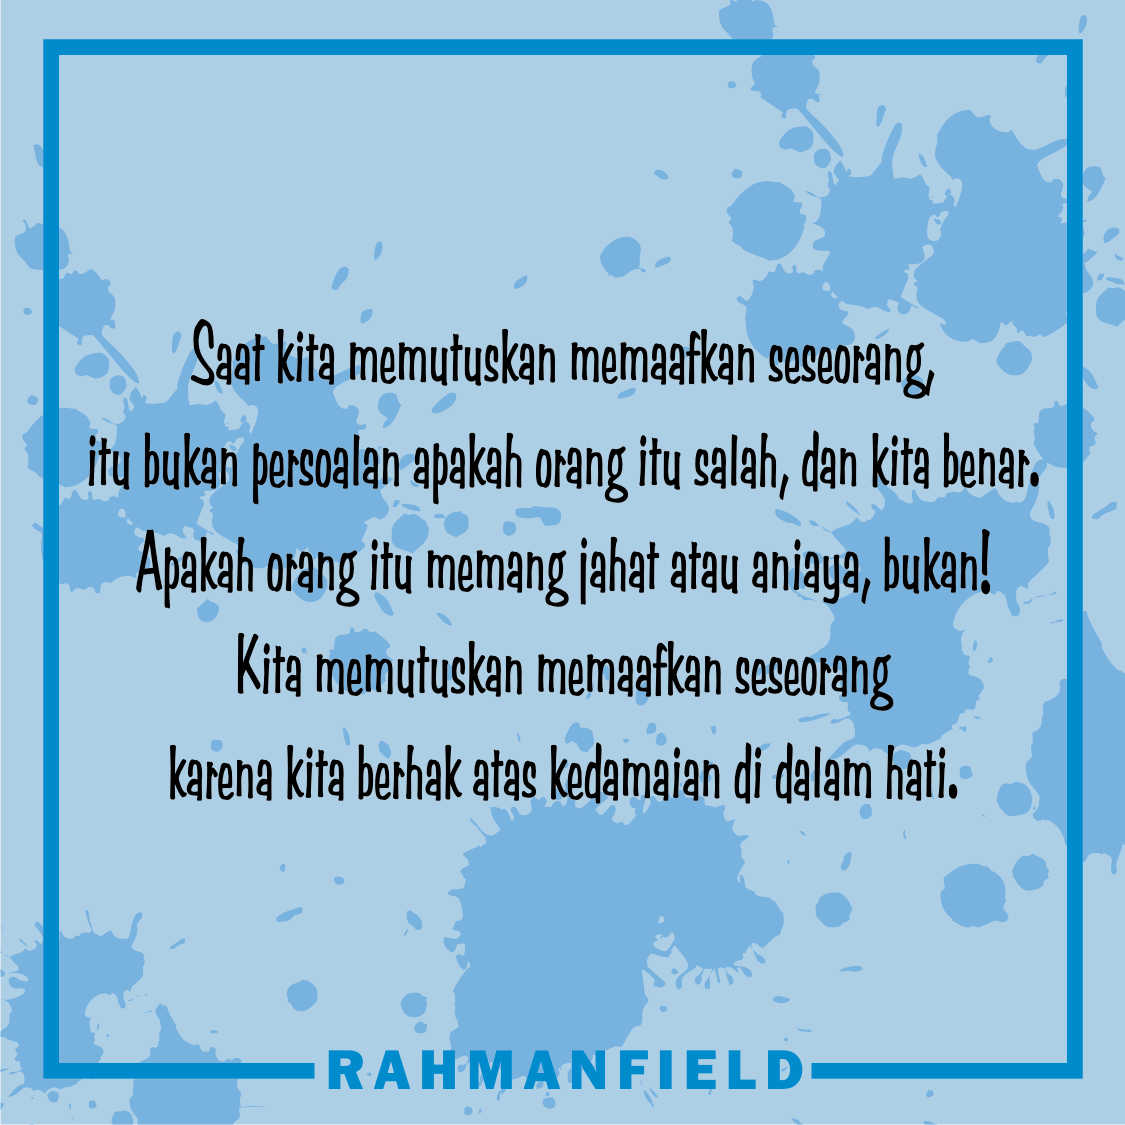 RELATIONSHIP Rahmanfield Information